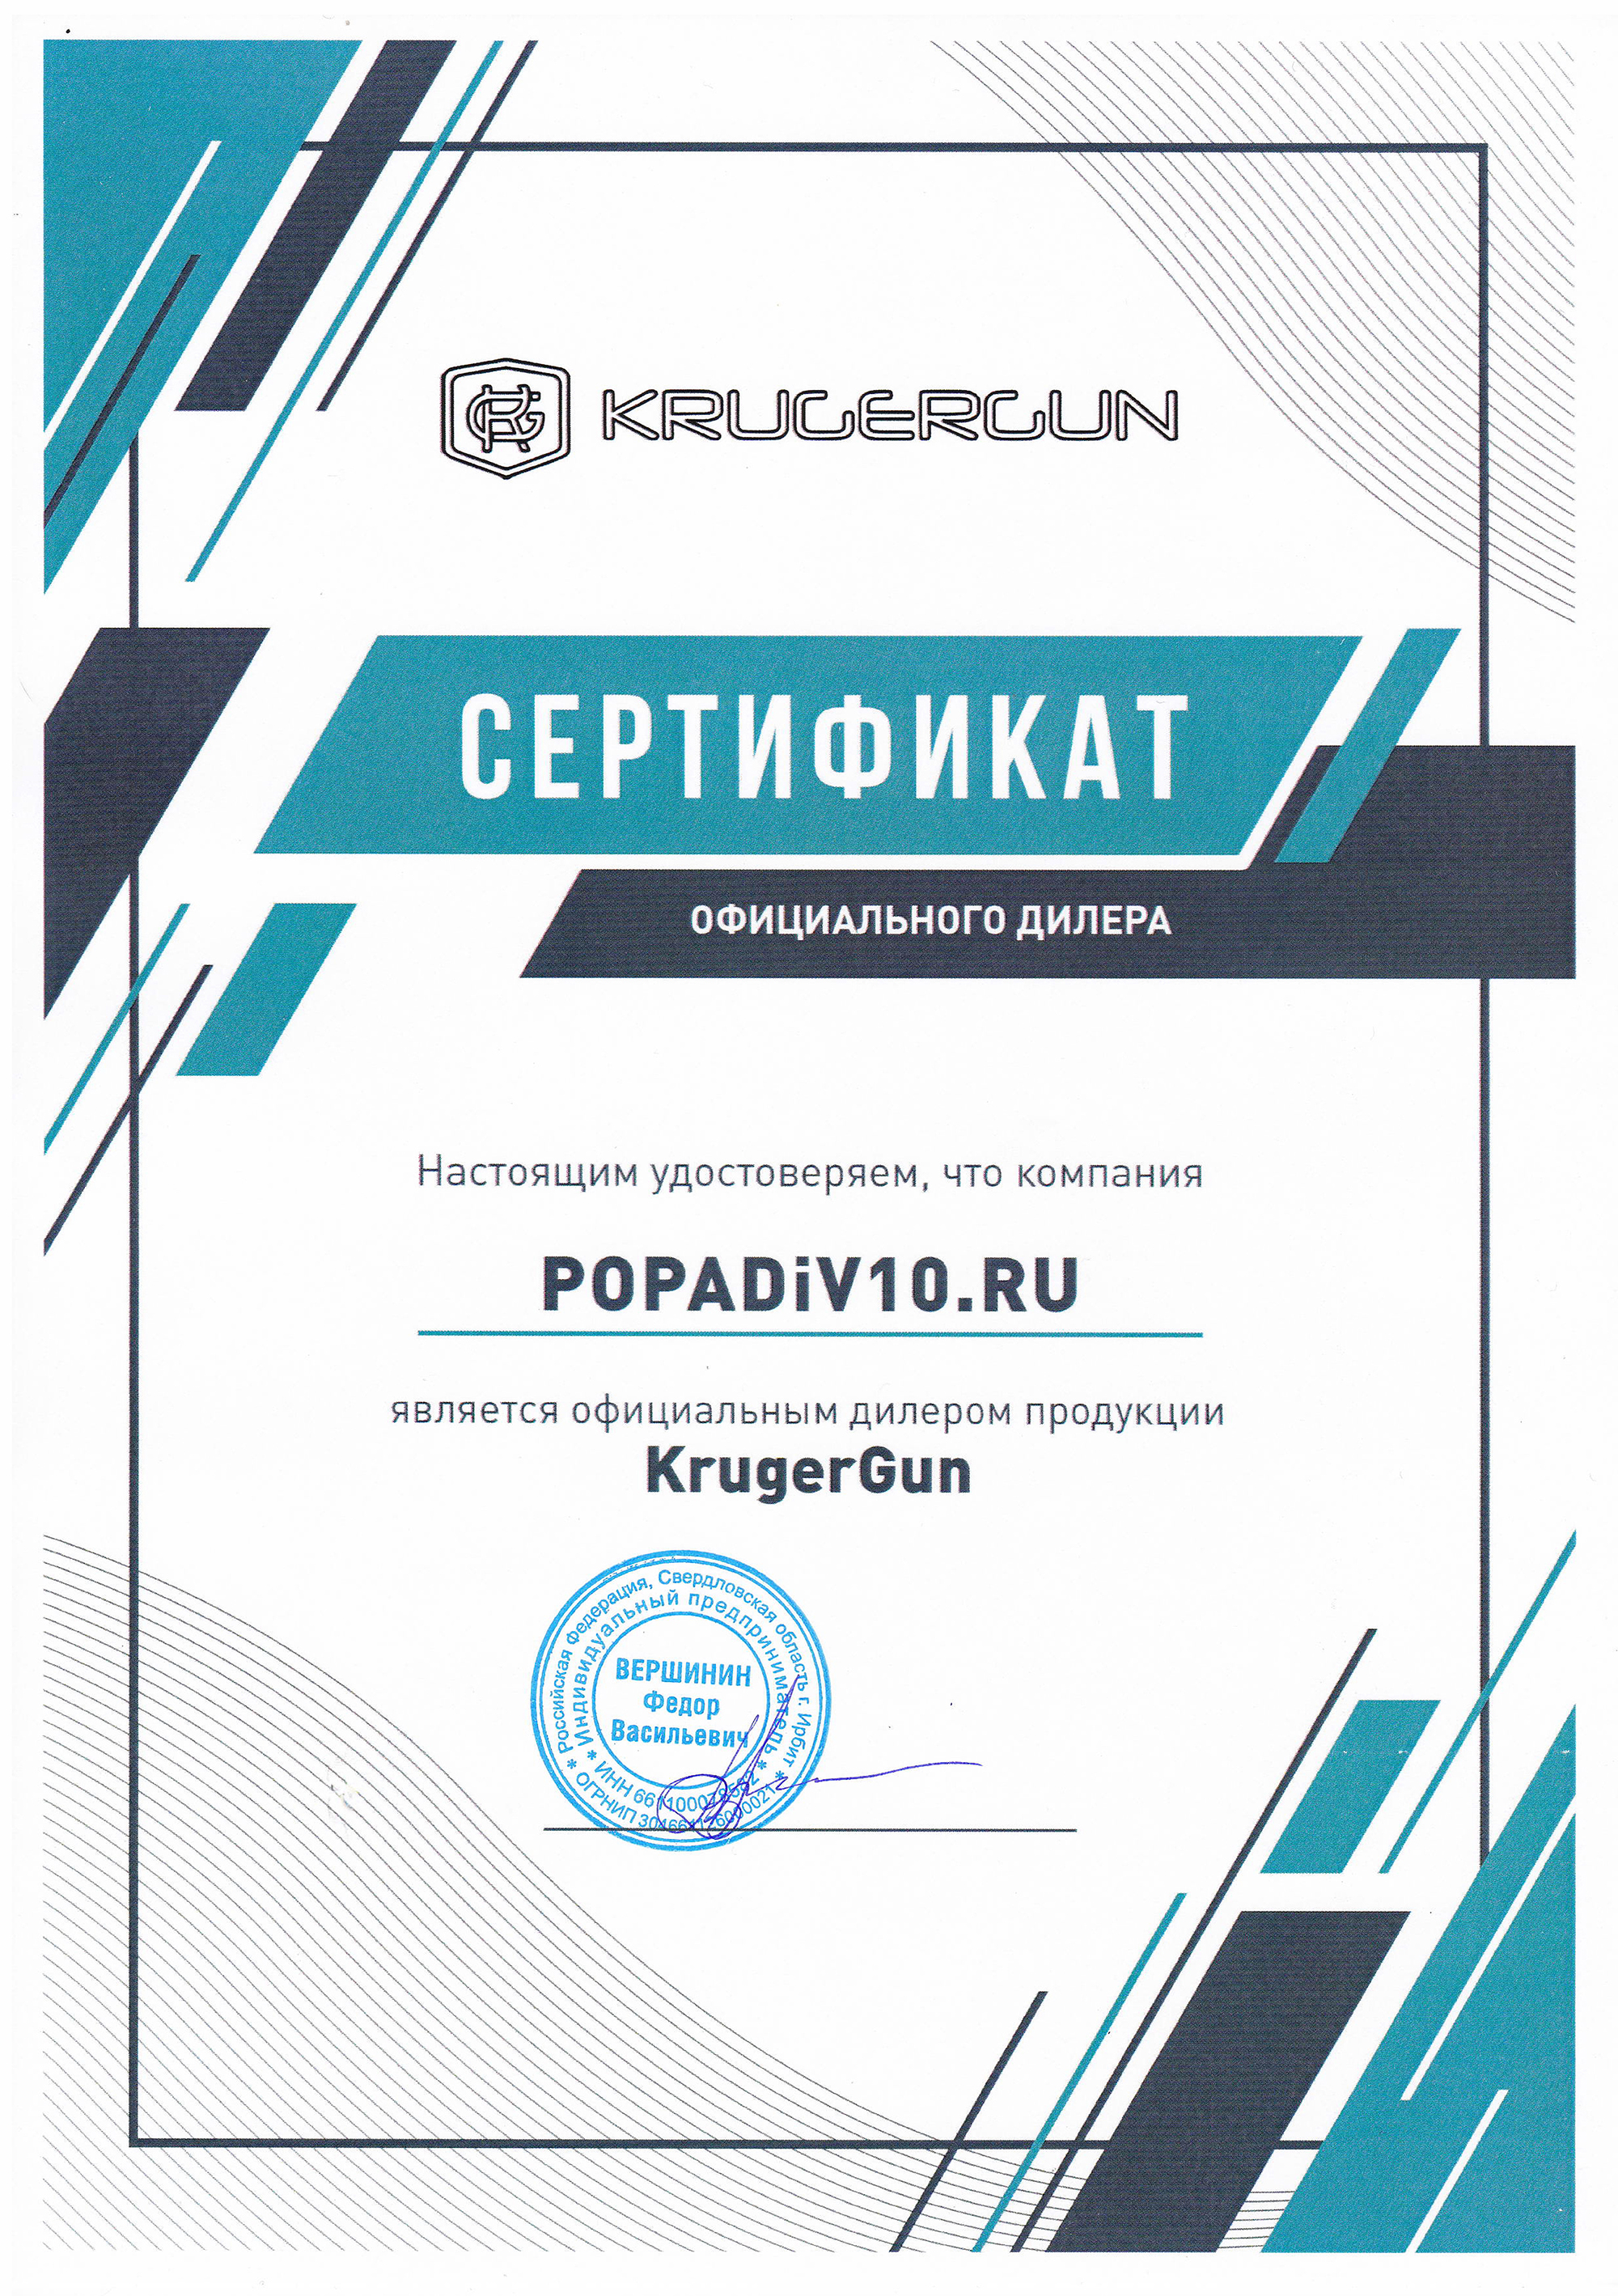 Krugergun - официальный дилер Popadiv10